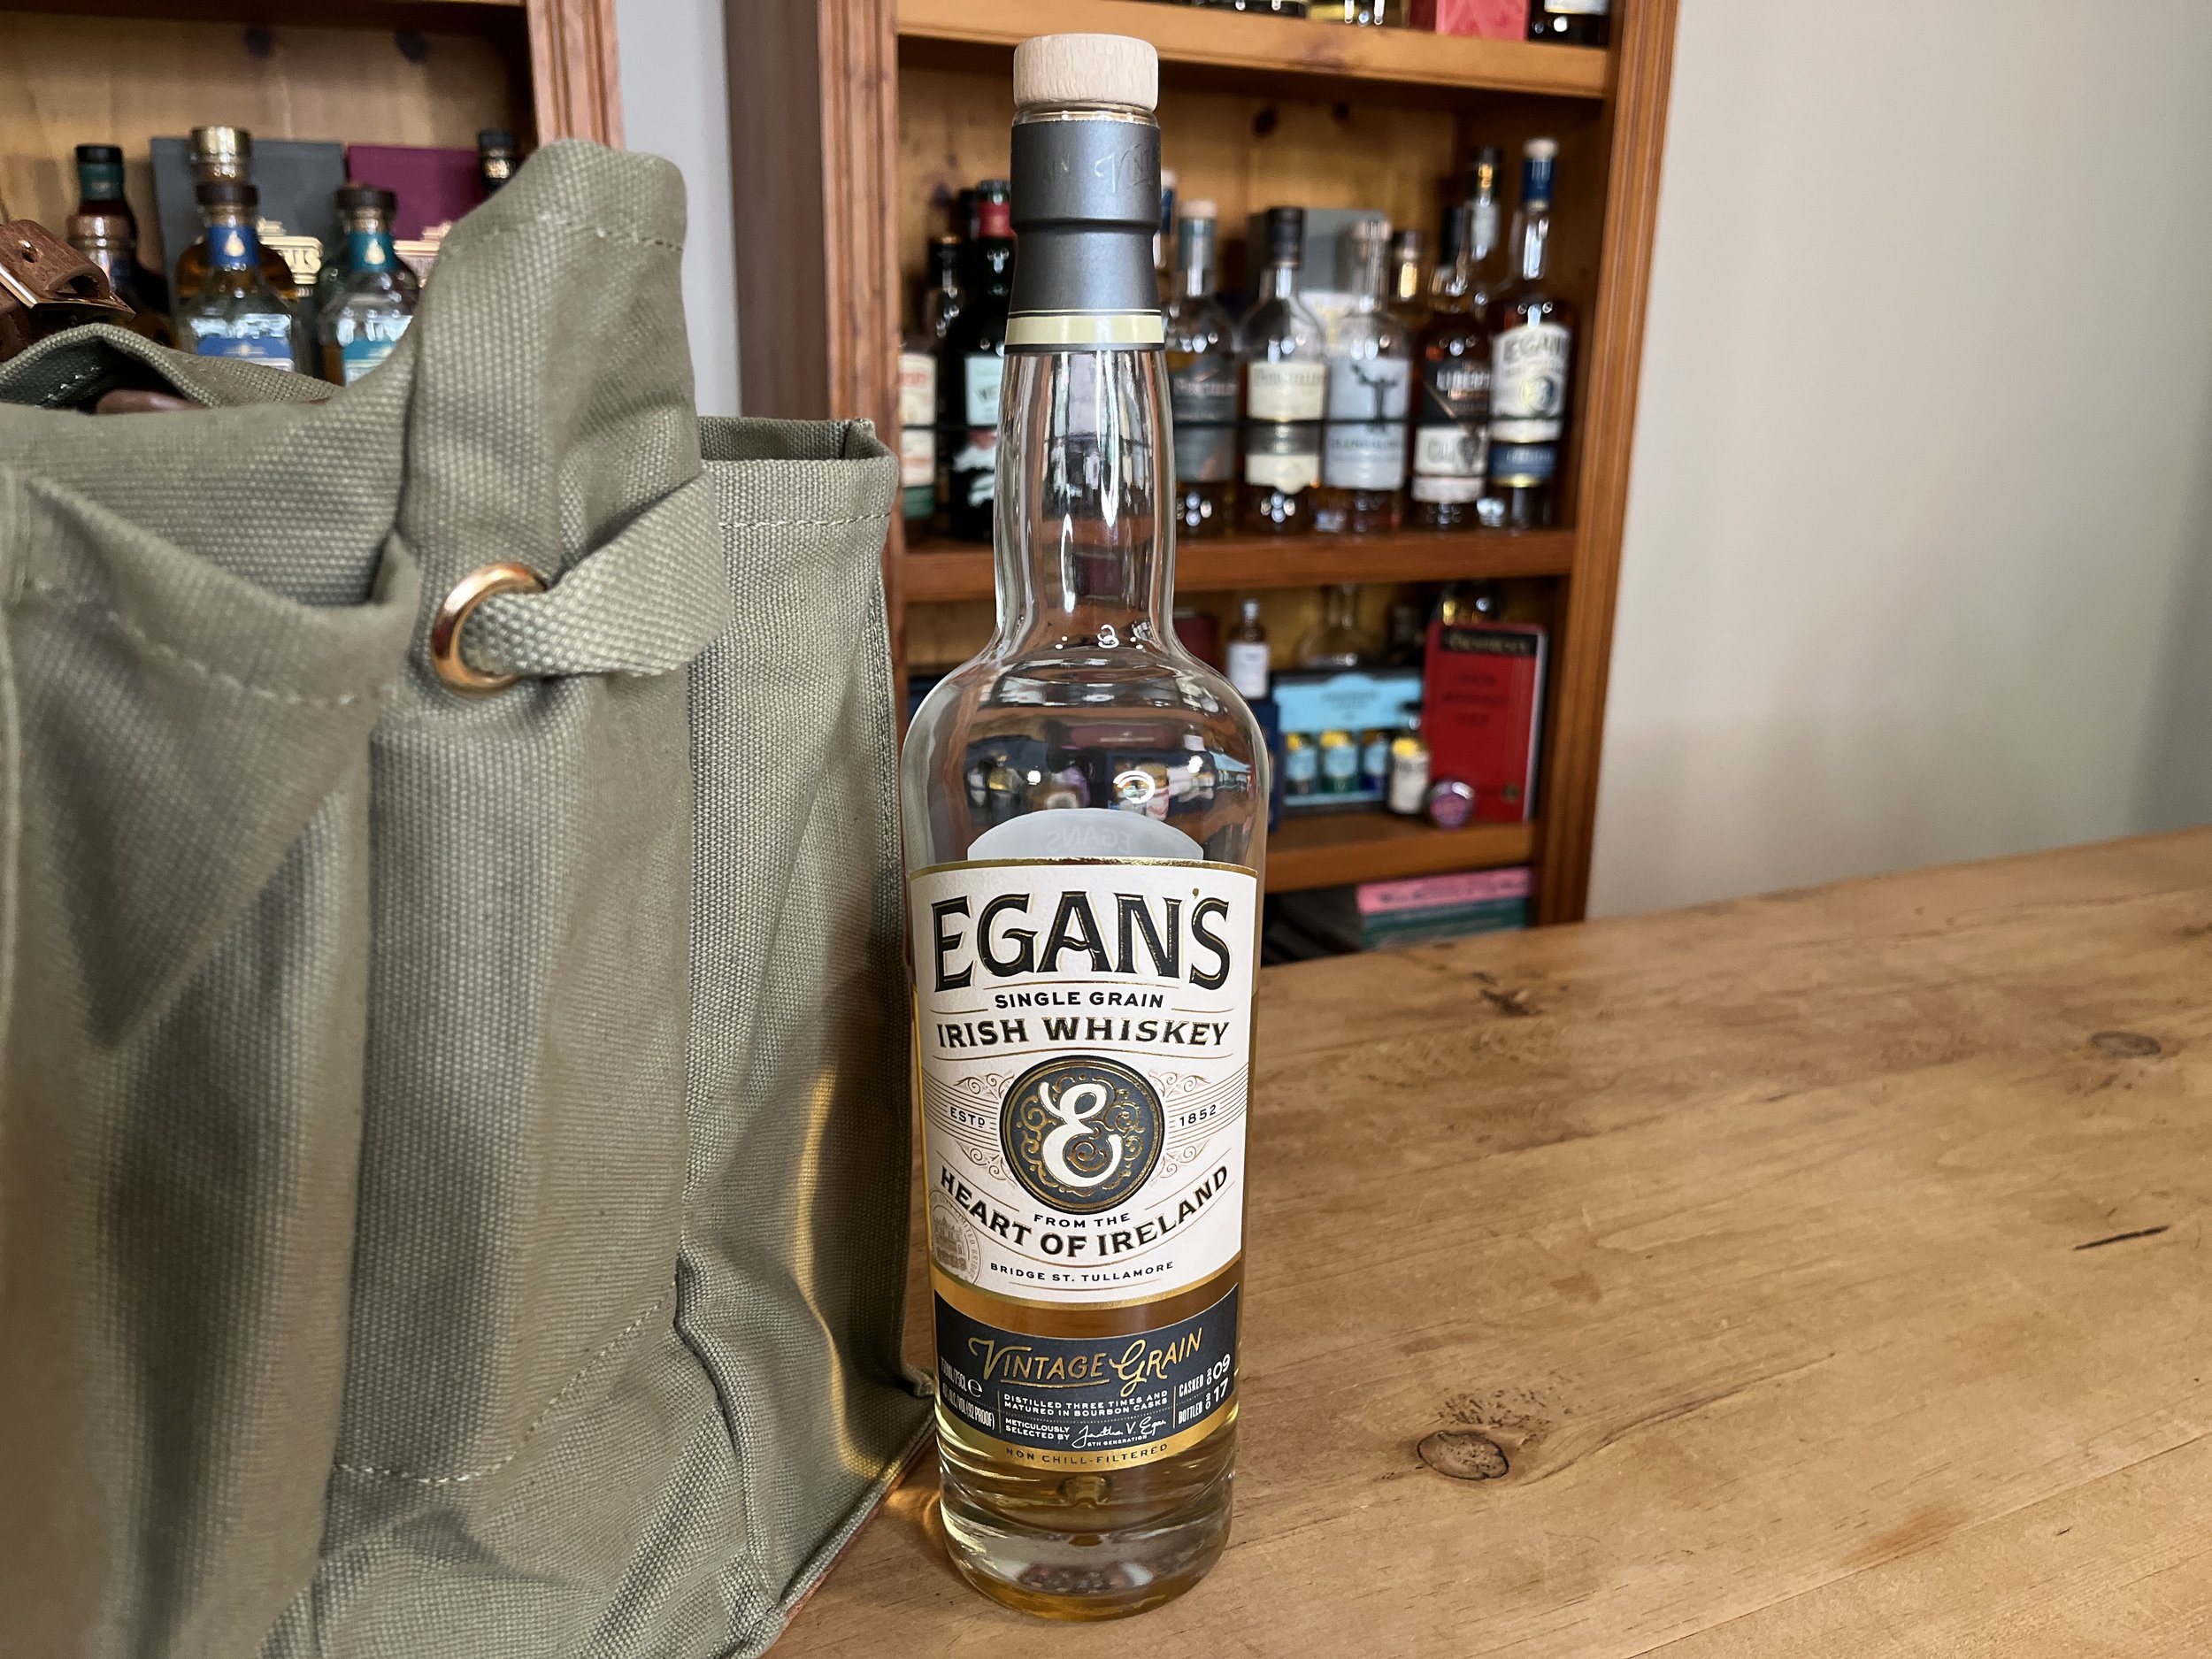 Egans Vintage Grain Single Grain Irish Whiskey.JPG